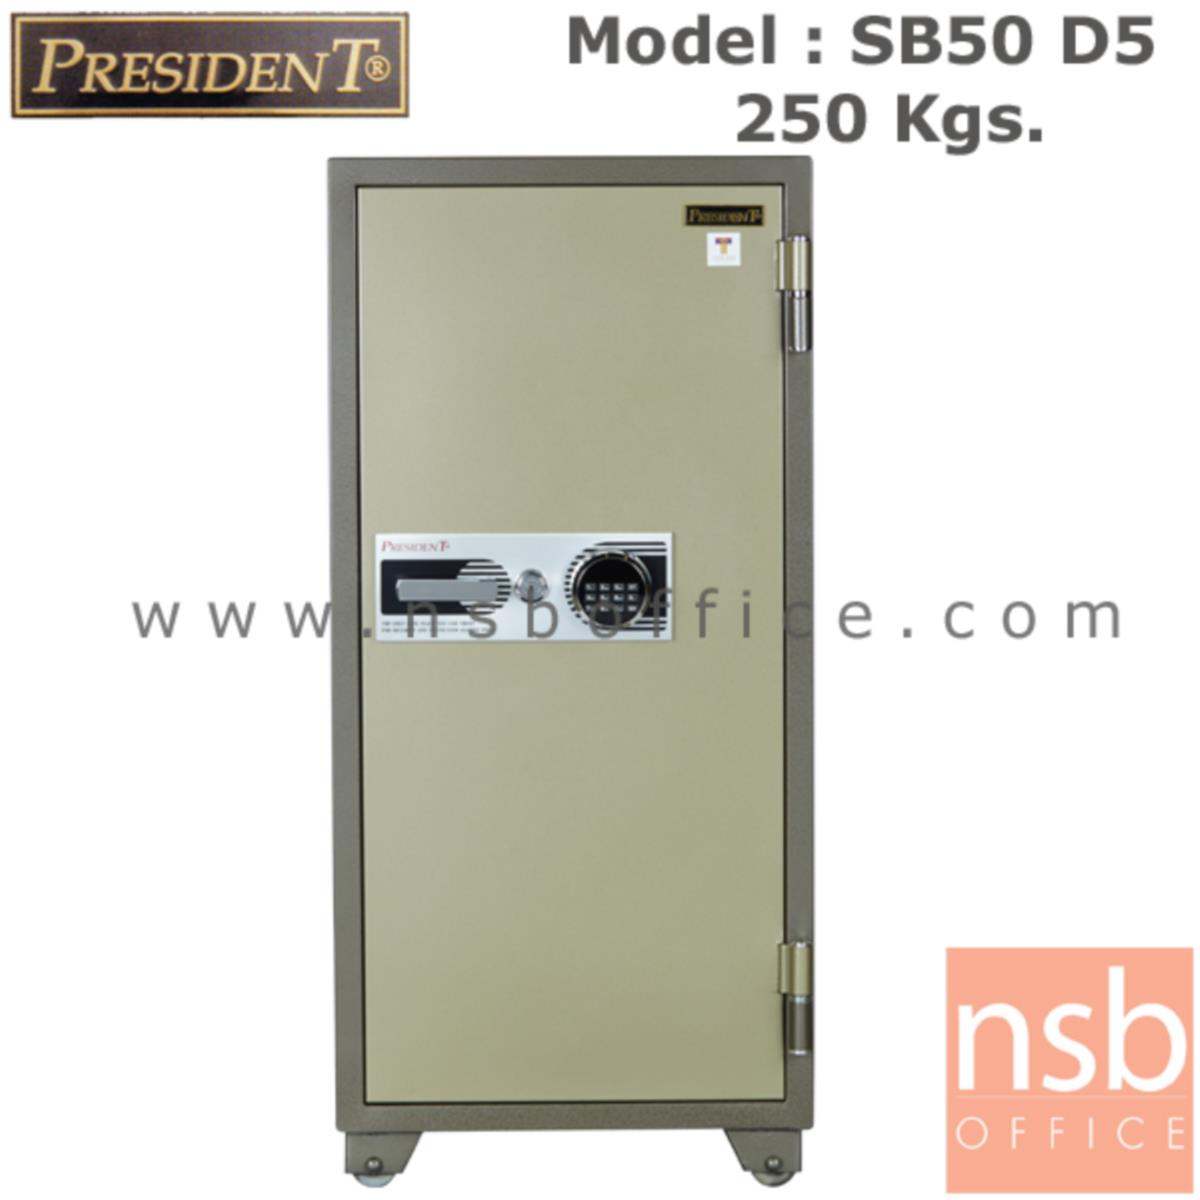 F05A063:ตู้เซฟนิรภัยชนิดดิจิตอลแบบใหม่ 250 กก.  รุ่น PRESIDENT-SB50D5 มี 1 กุญแจ 1 รหัส (รหัสใช้กดหน้าตู้)